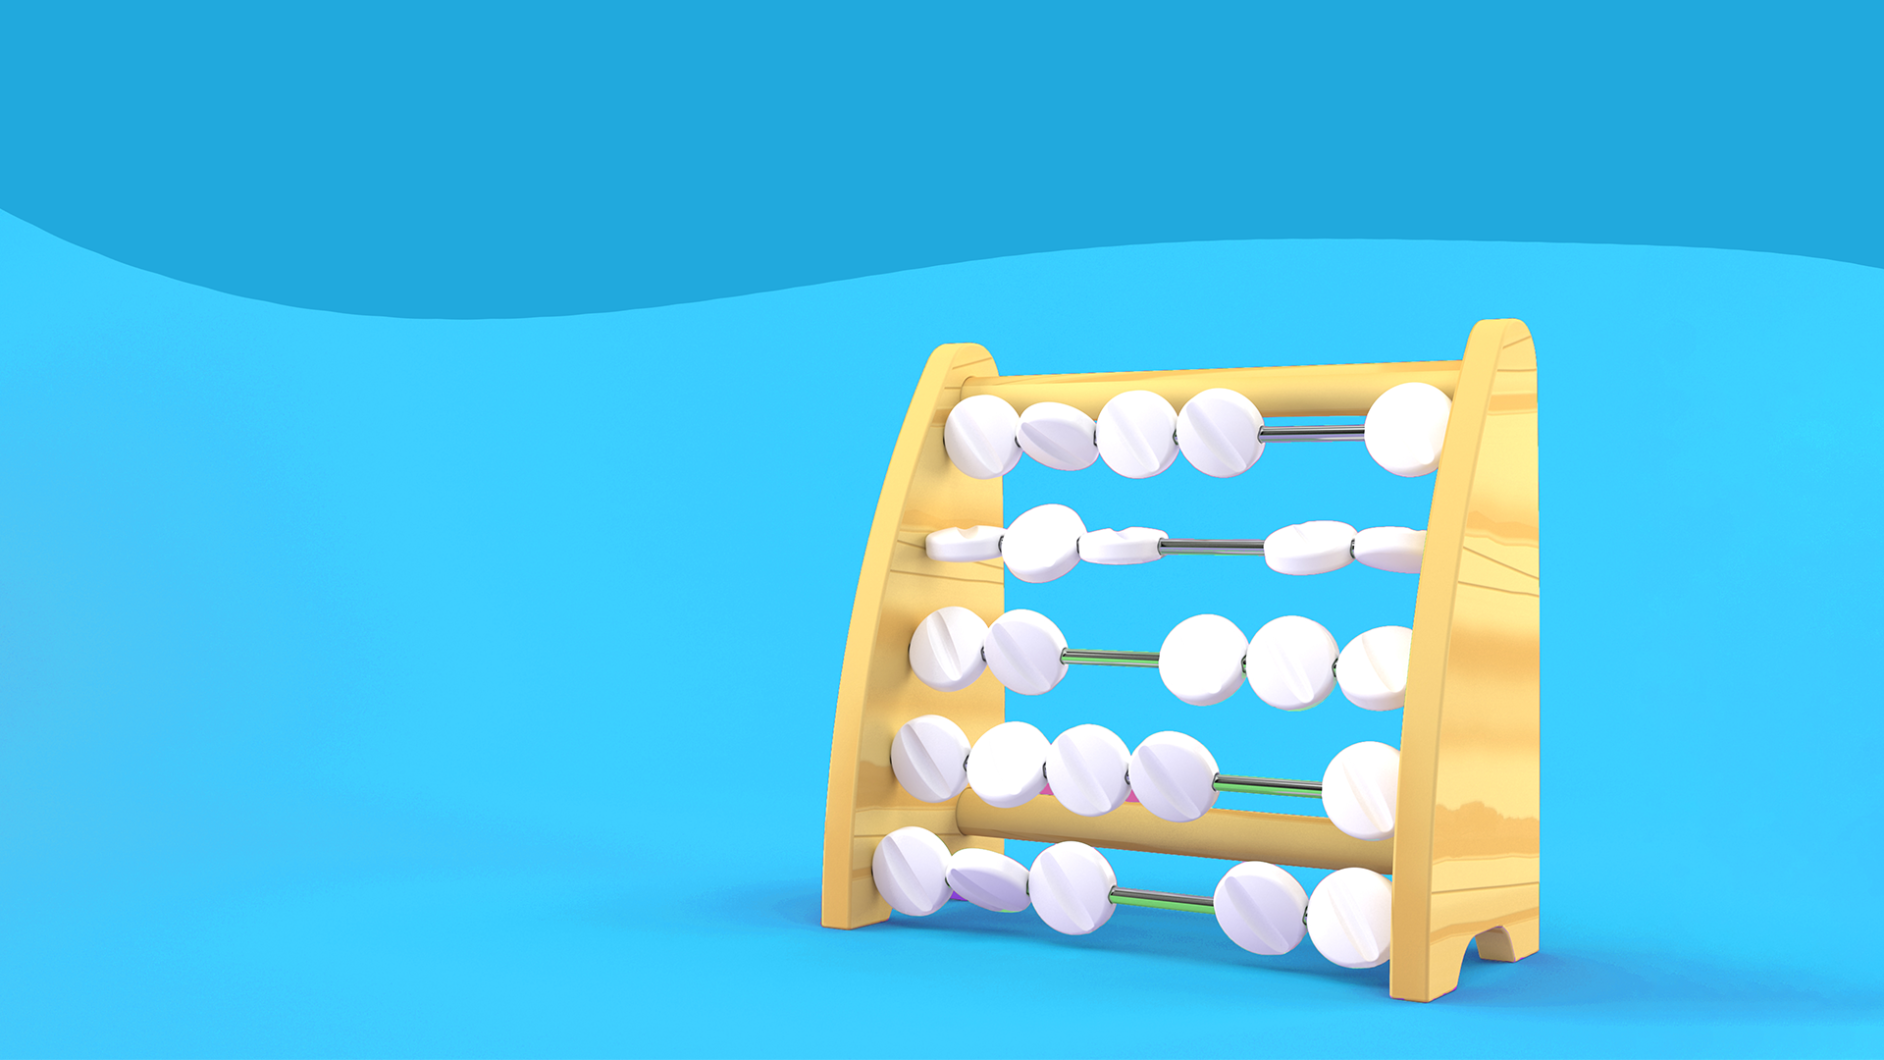 An abacus made of pills represents prescription reminder tools